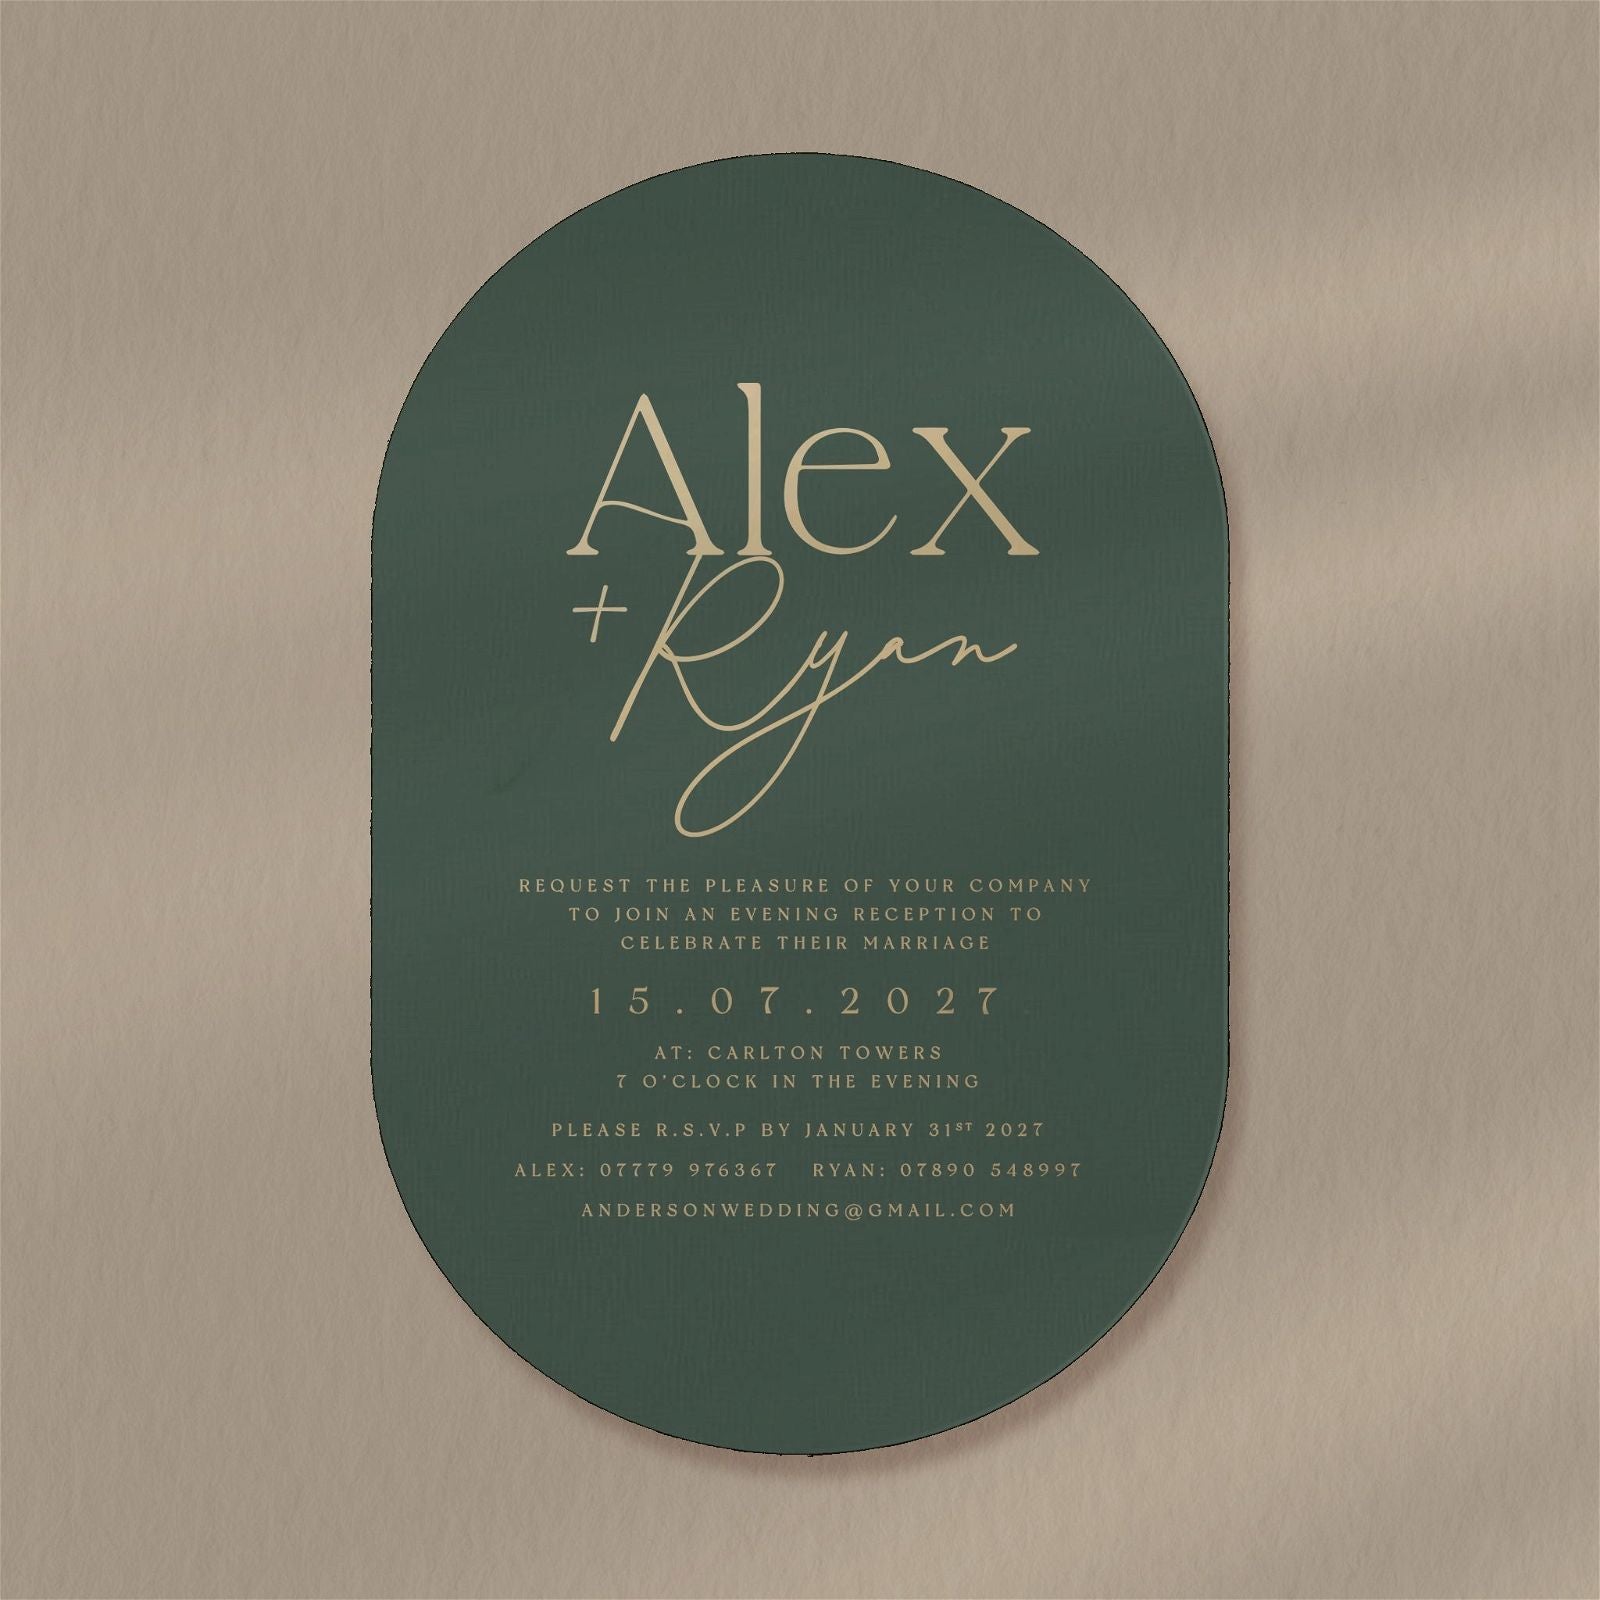 Alex Evening Invitation  Ivy and Gold Wedding Stationery   